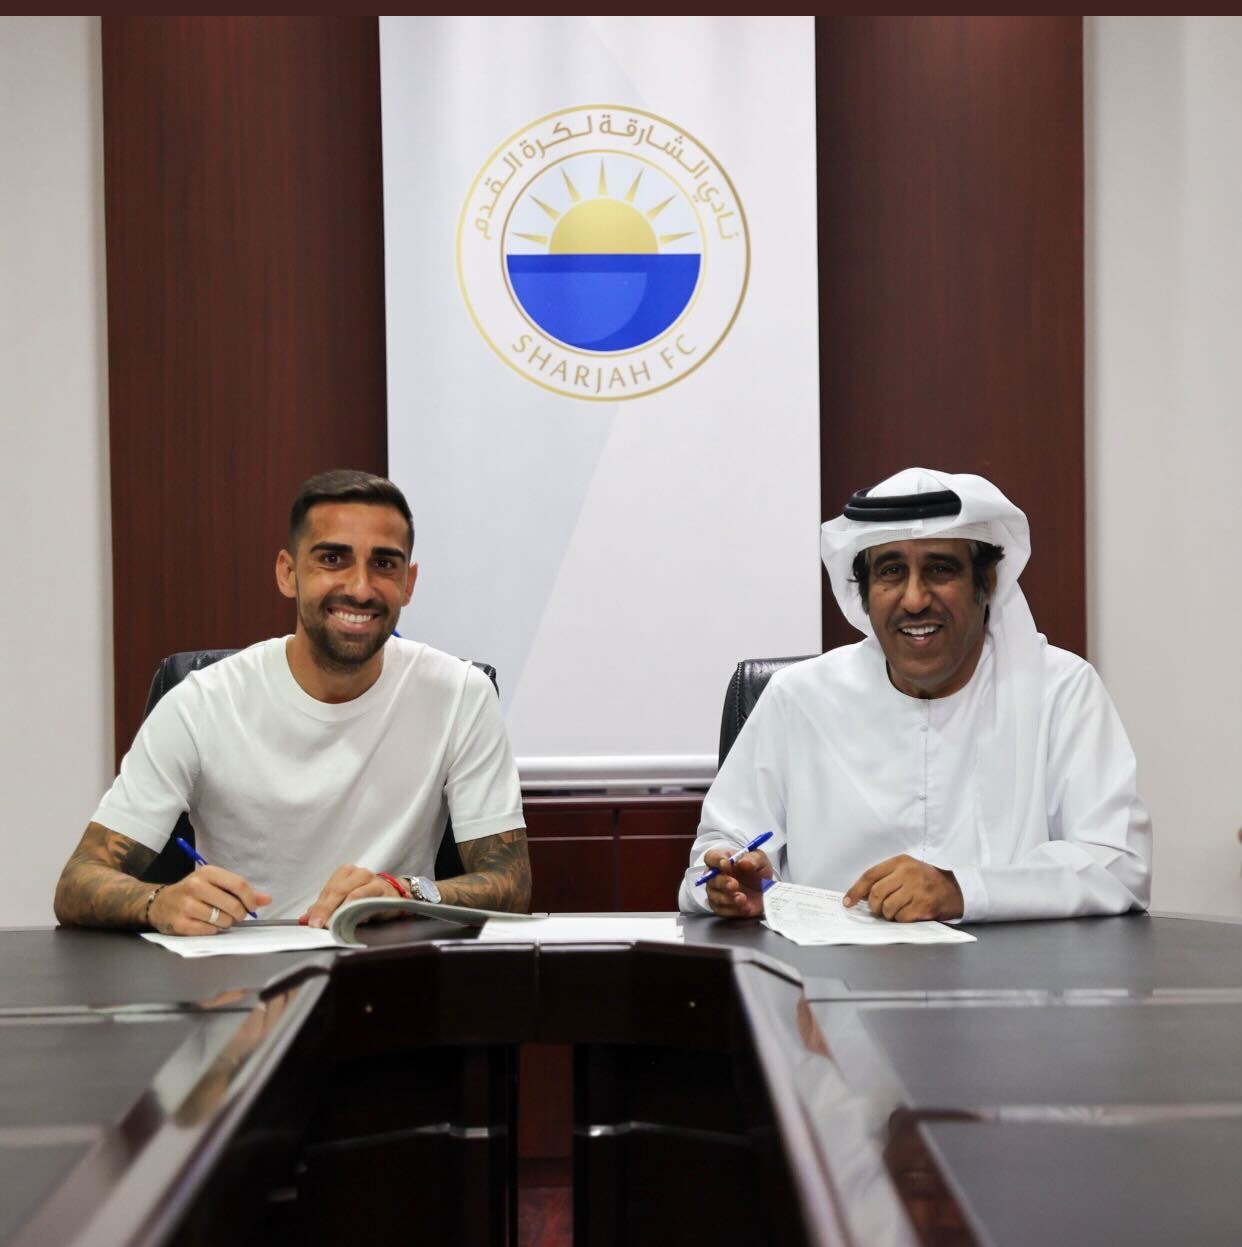 Alcácer en la firma que le vincula al club saudí / @SharjahFC